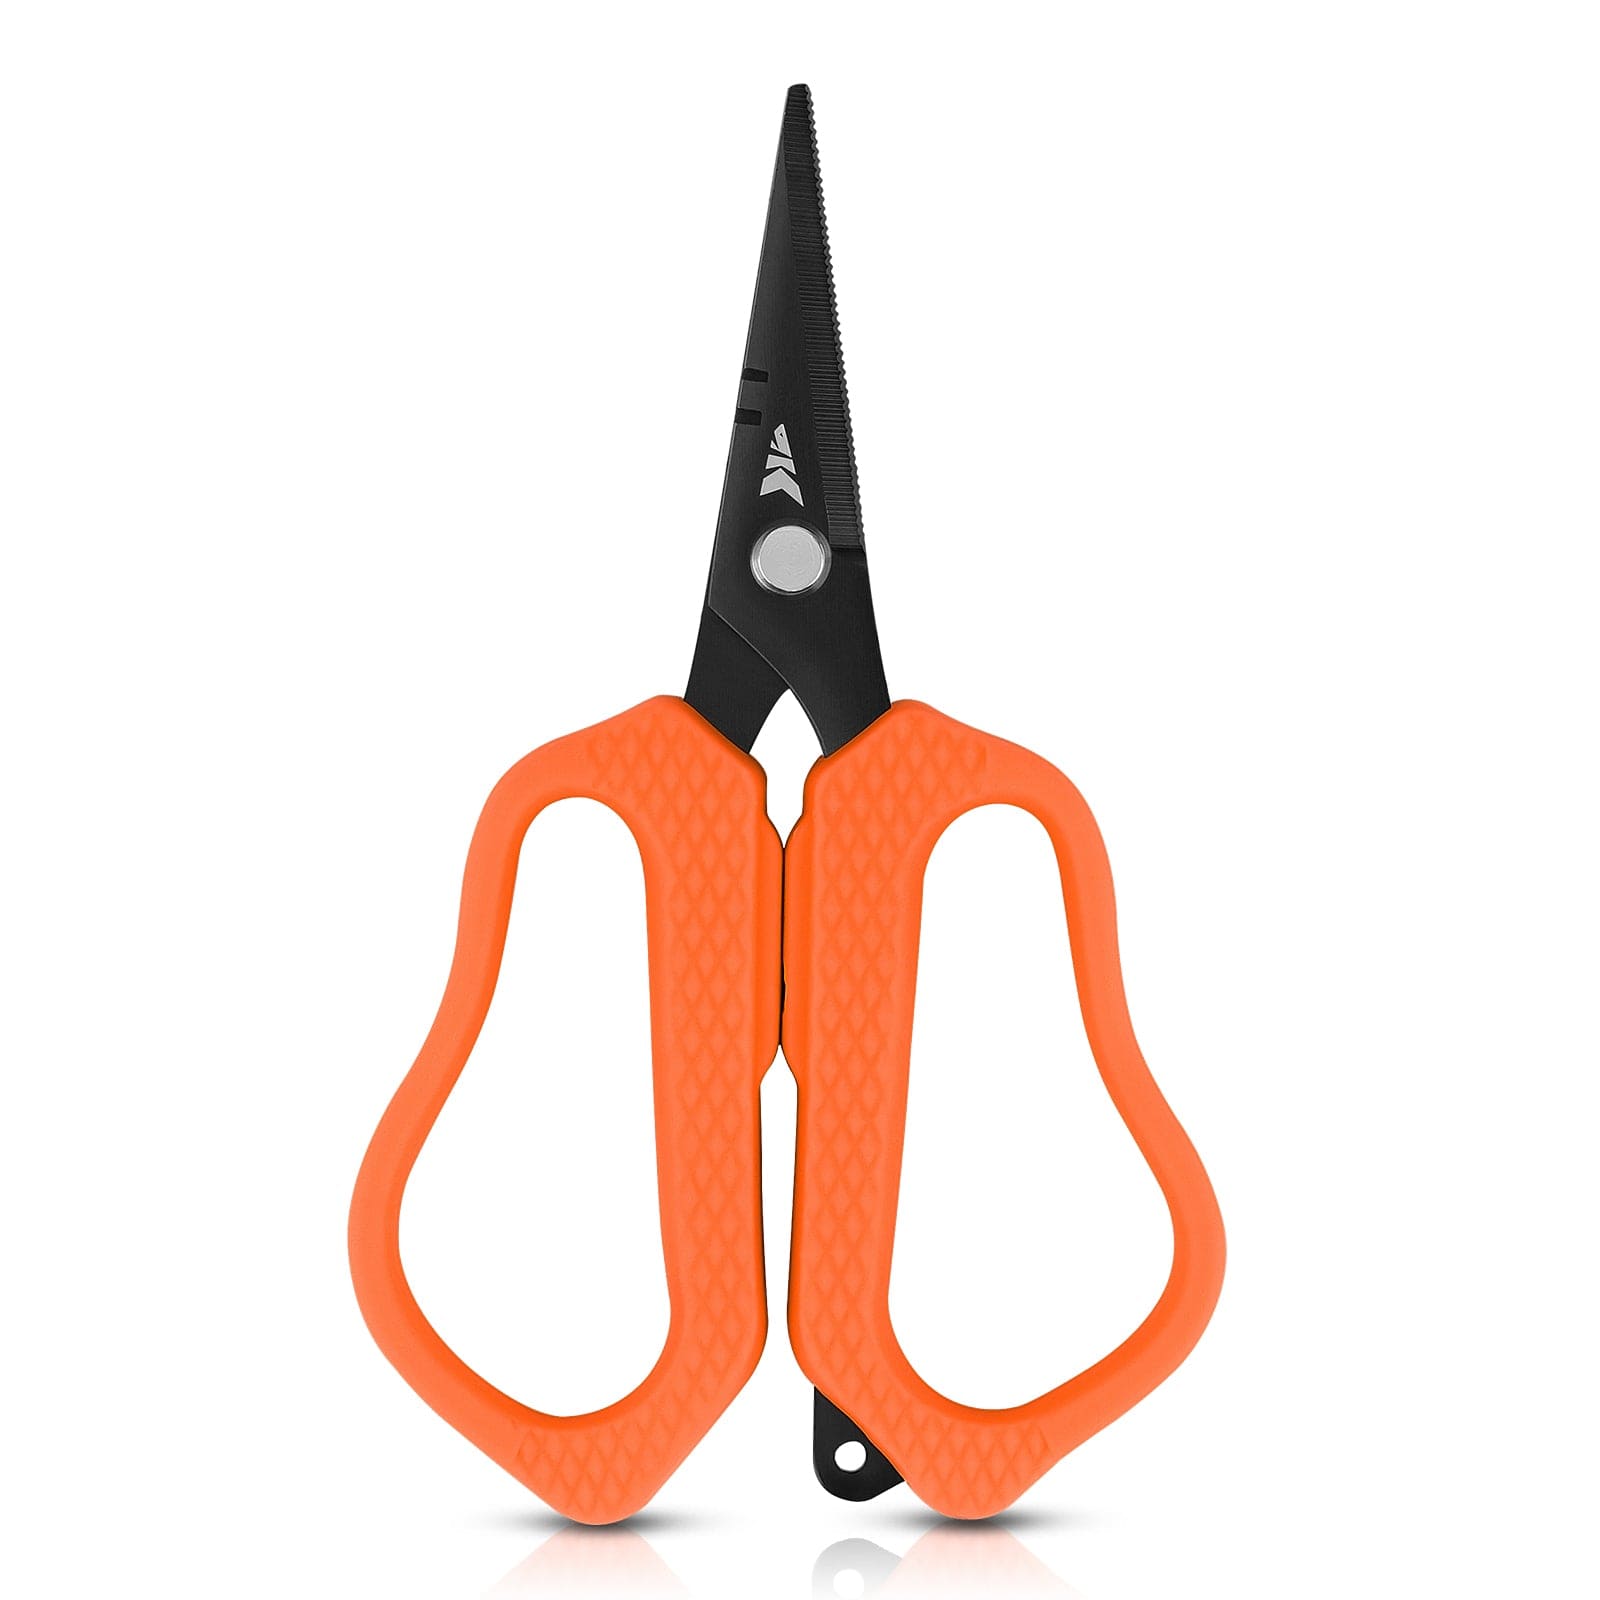 KastKing 5-inch Braid Scissors (Limit Purchase 1Pc)